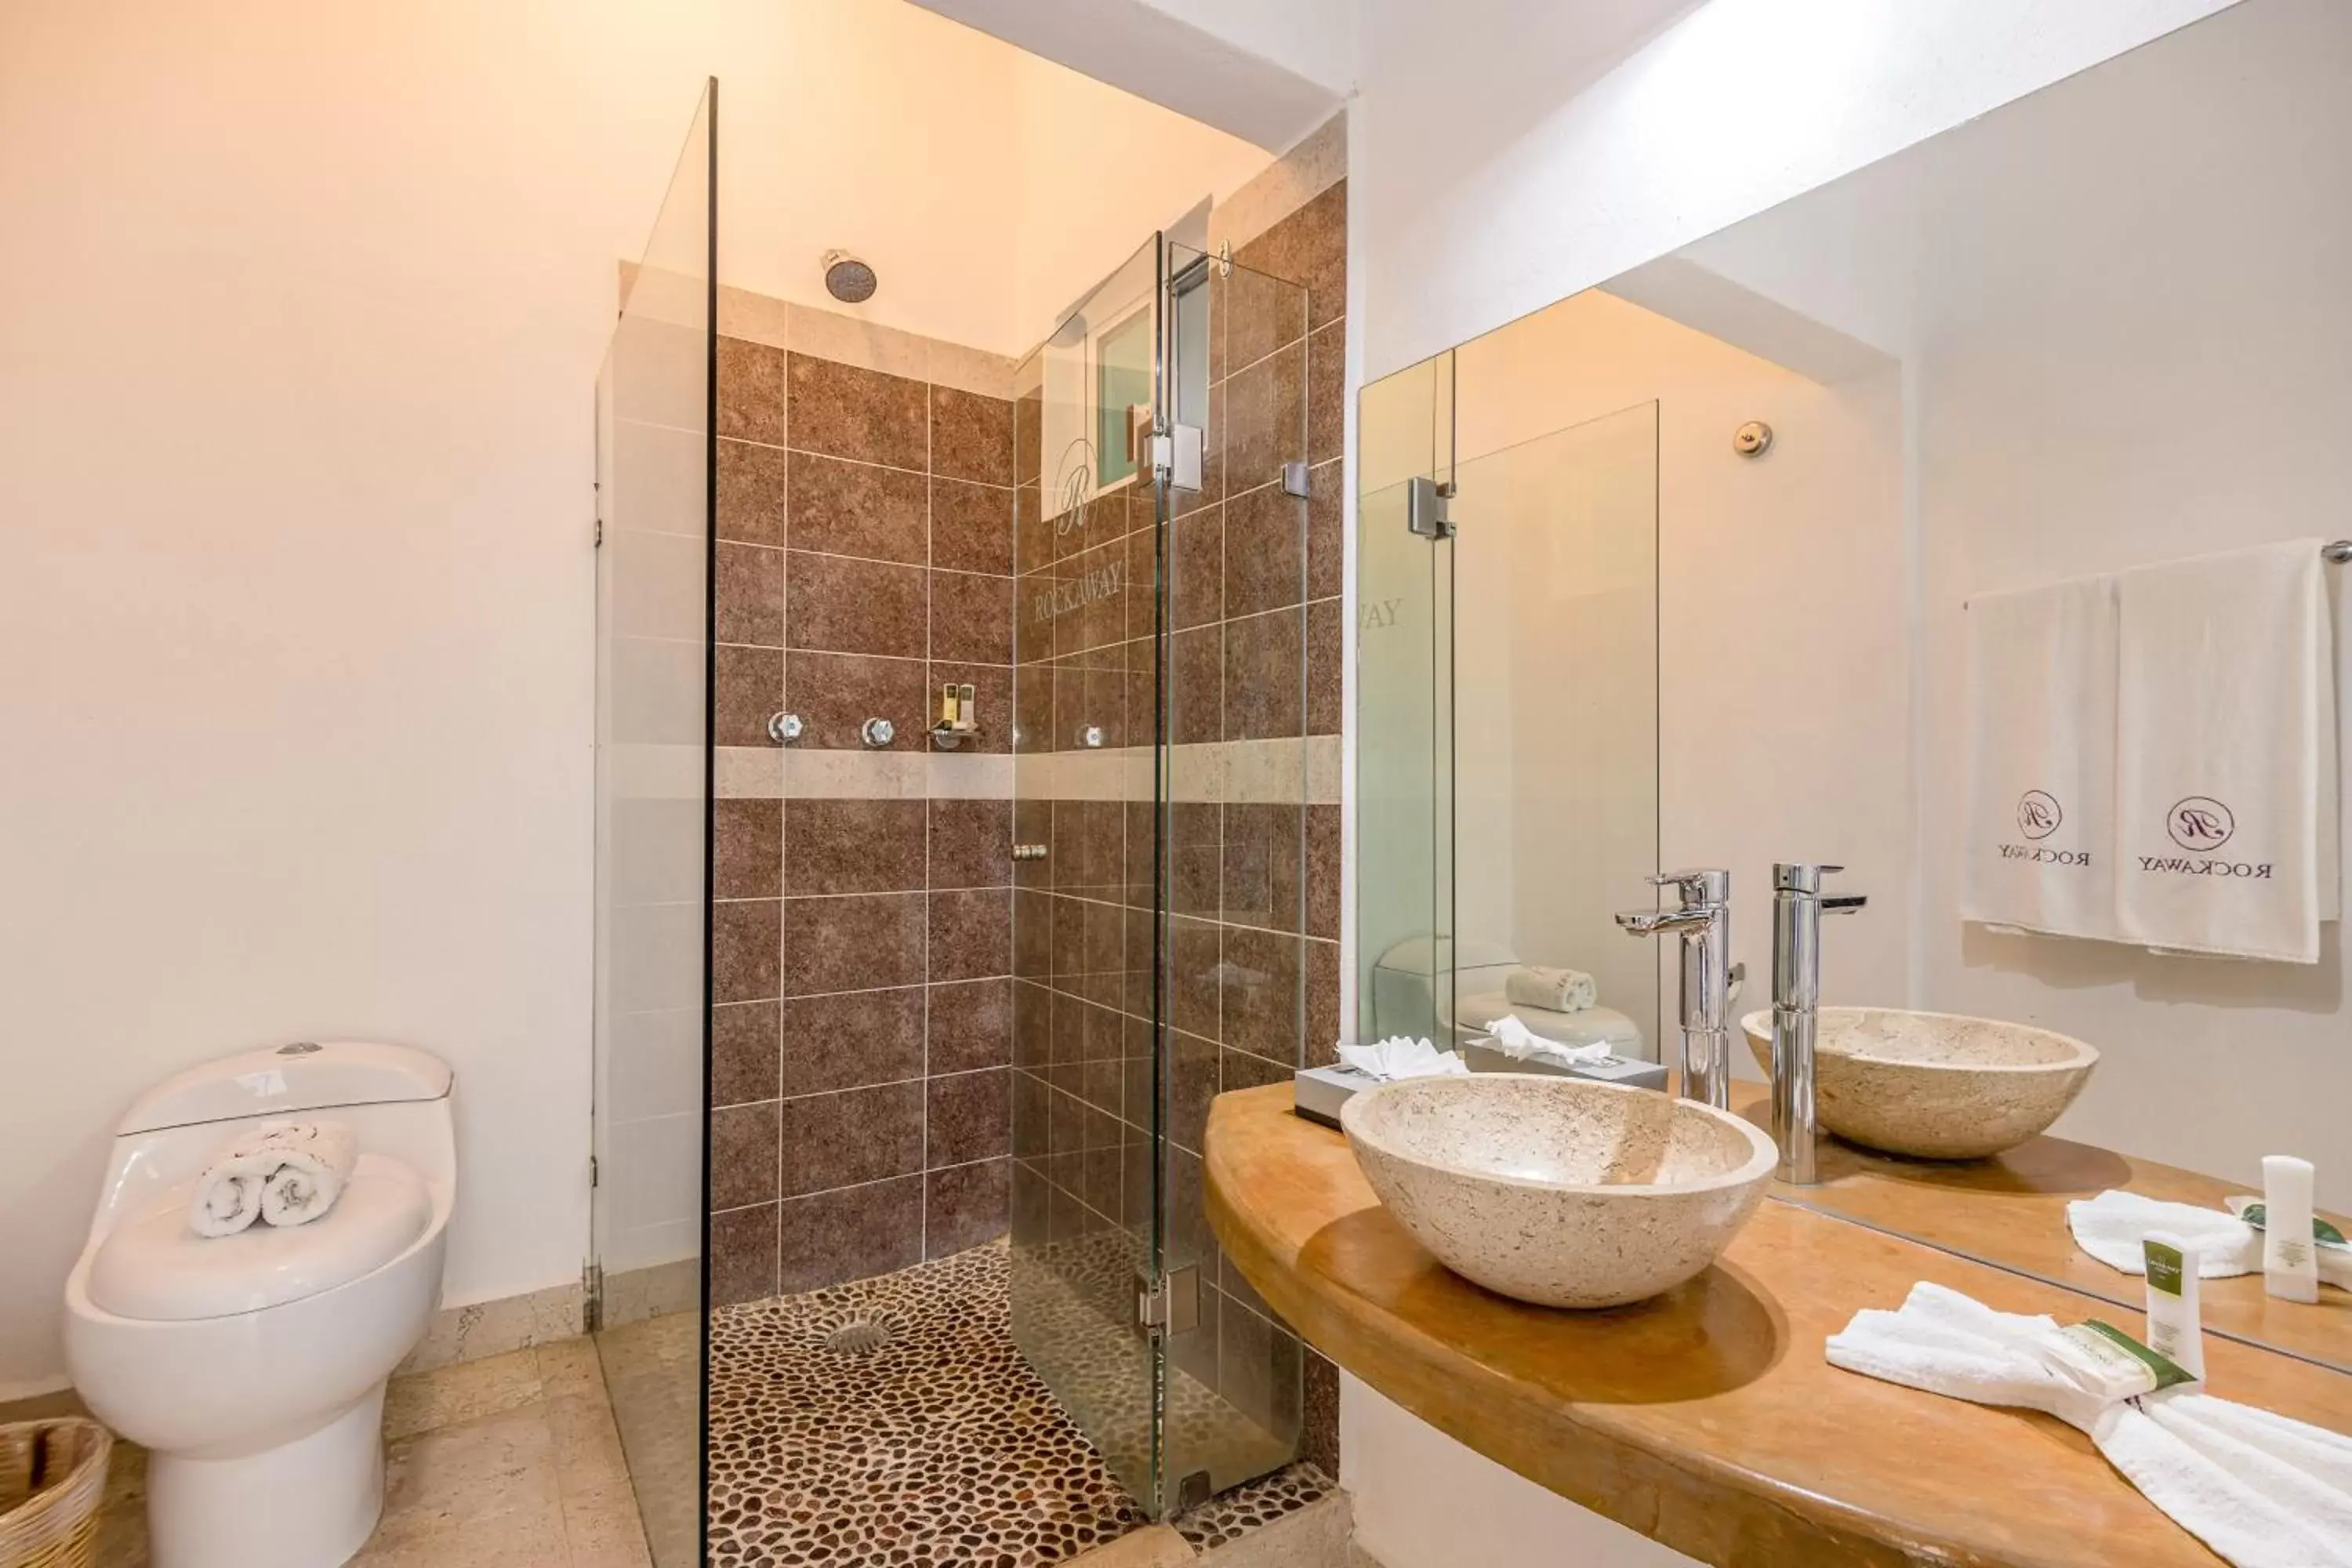 Bathroom in Hotel Rockaway